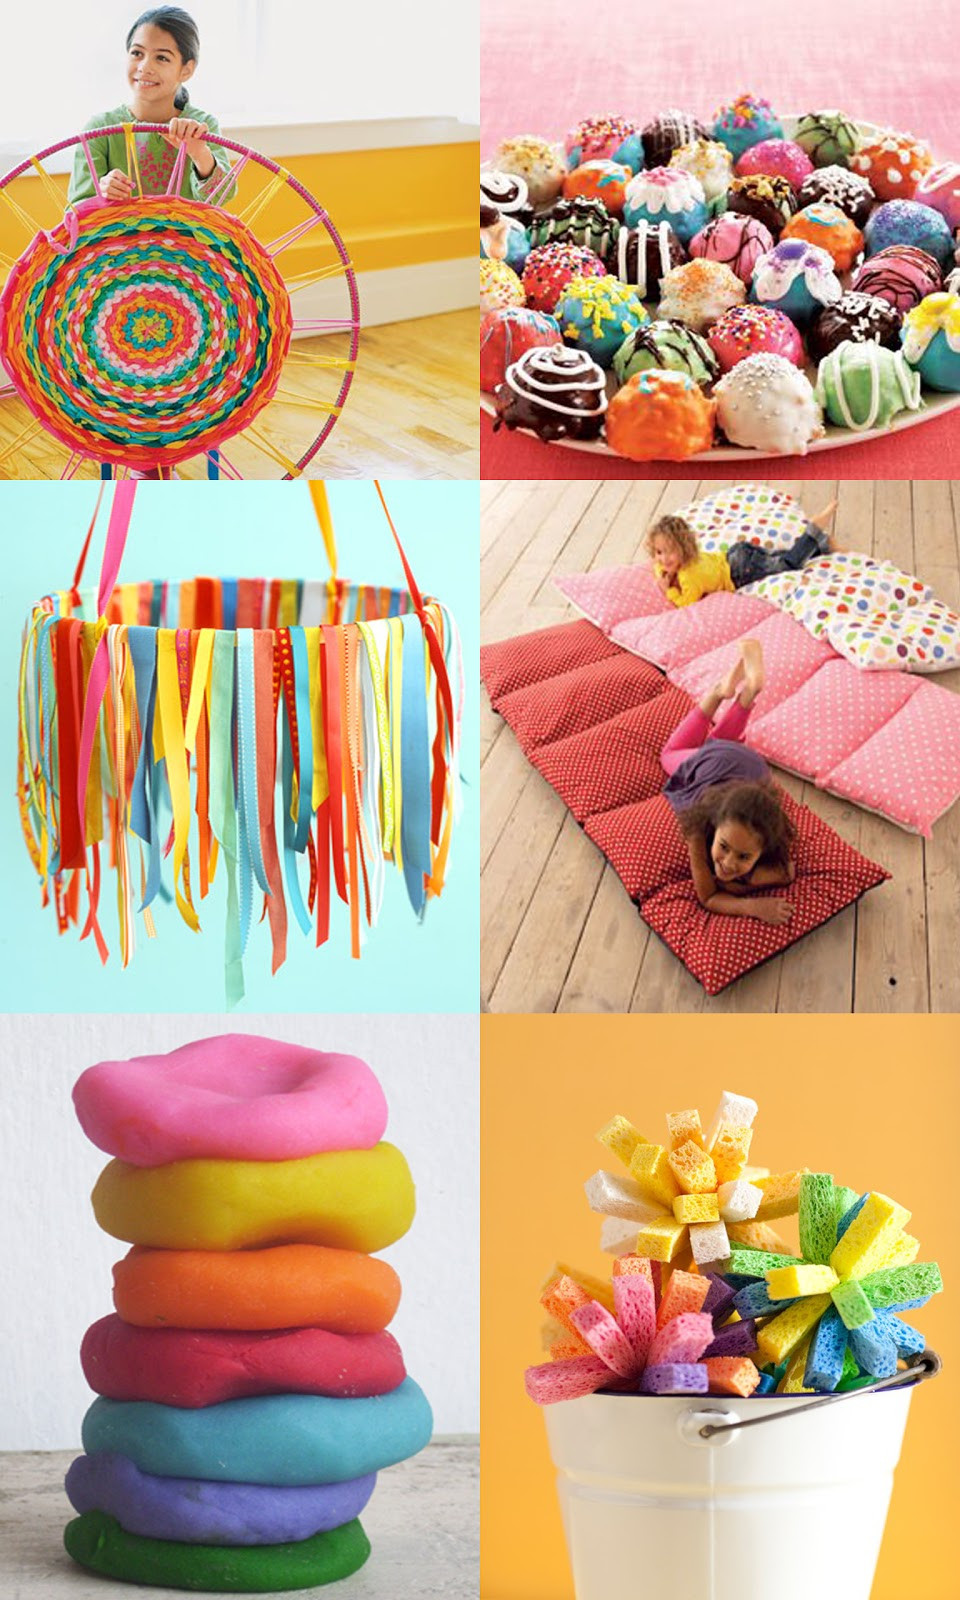 Best ideas about Summer Crafts Ideas
. Save or Pin WONDER WREN Super cute Summer Crafts Now.